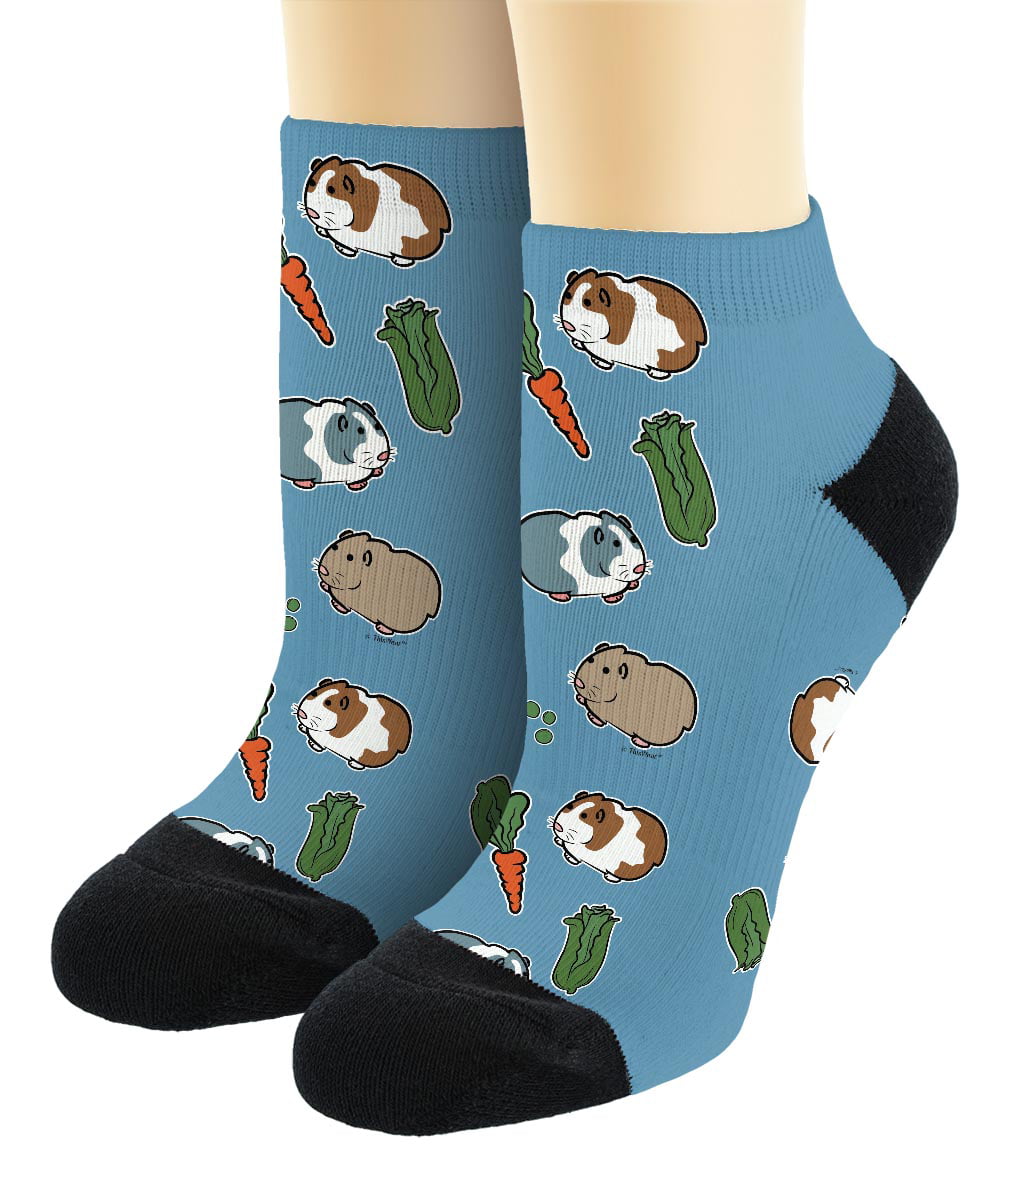 Guinea Pig Socks,Christmas Gifts Unisex Novelty Cotton Crazy Crew Socks